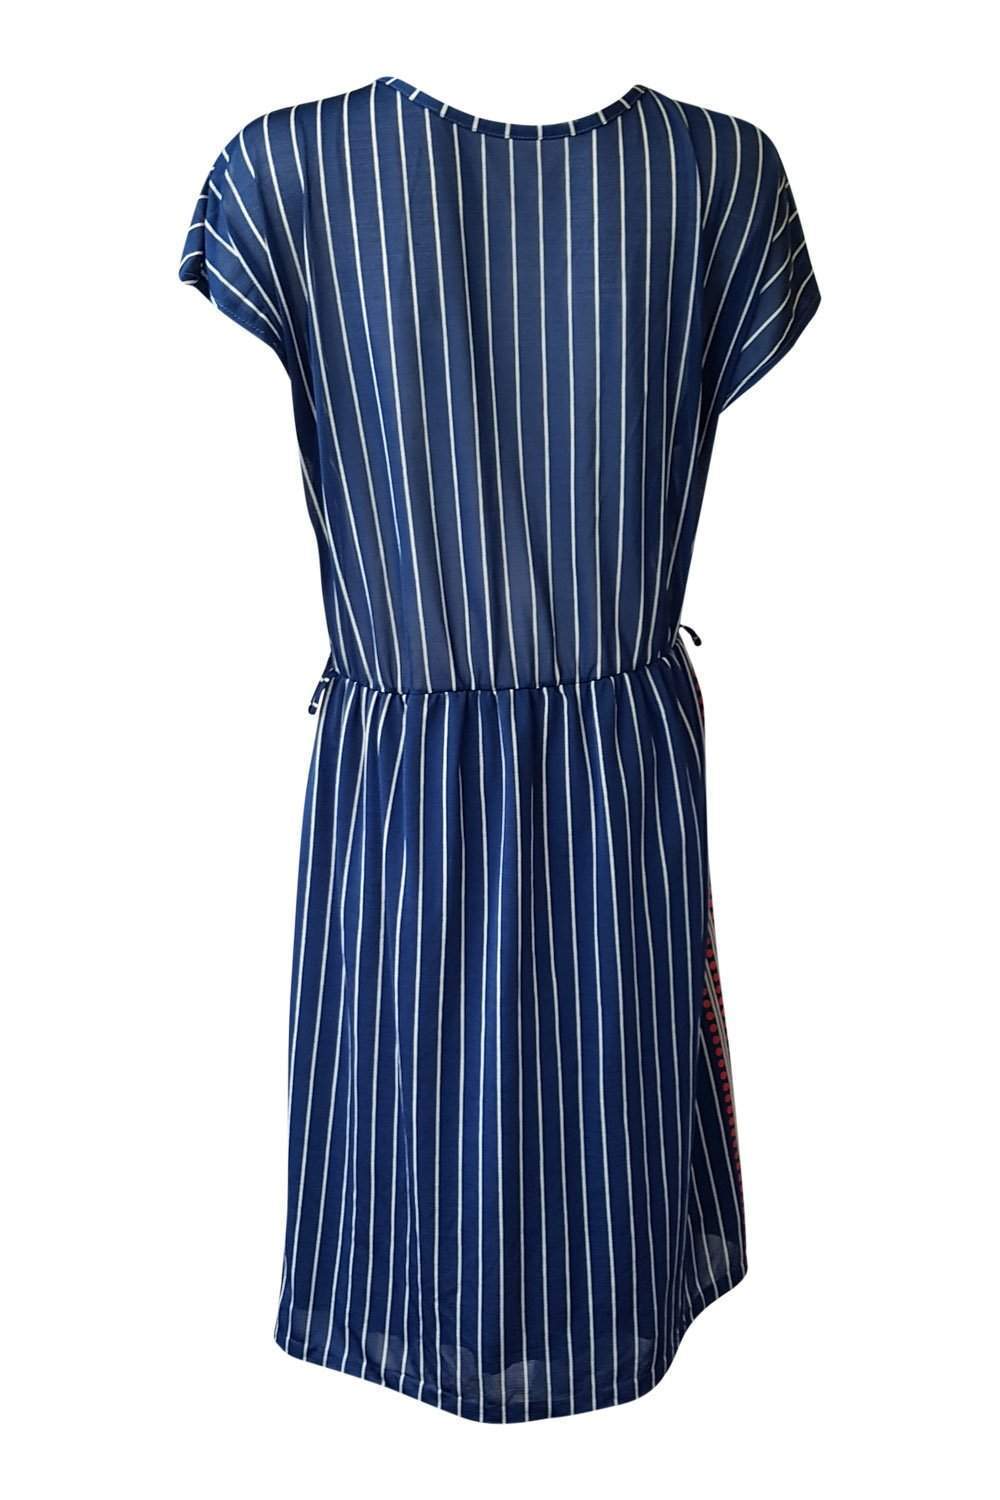 UNBRANDED Vintage Blue Pinstripe Dress-Unbranded-The Freperie